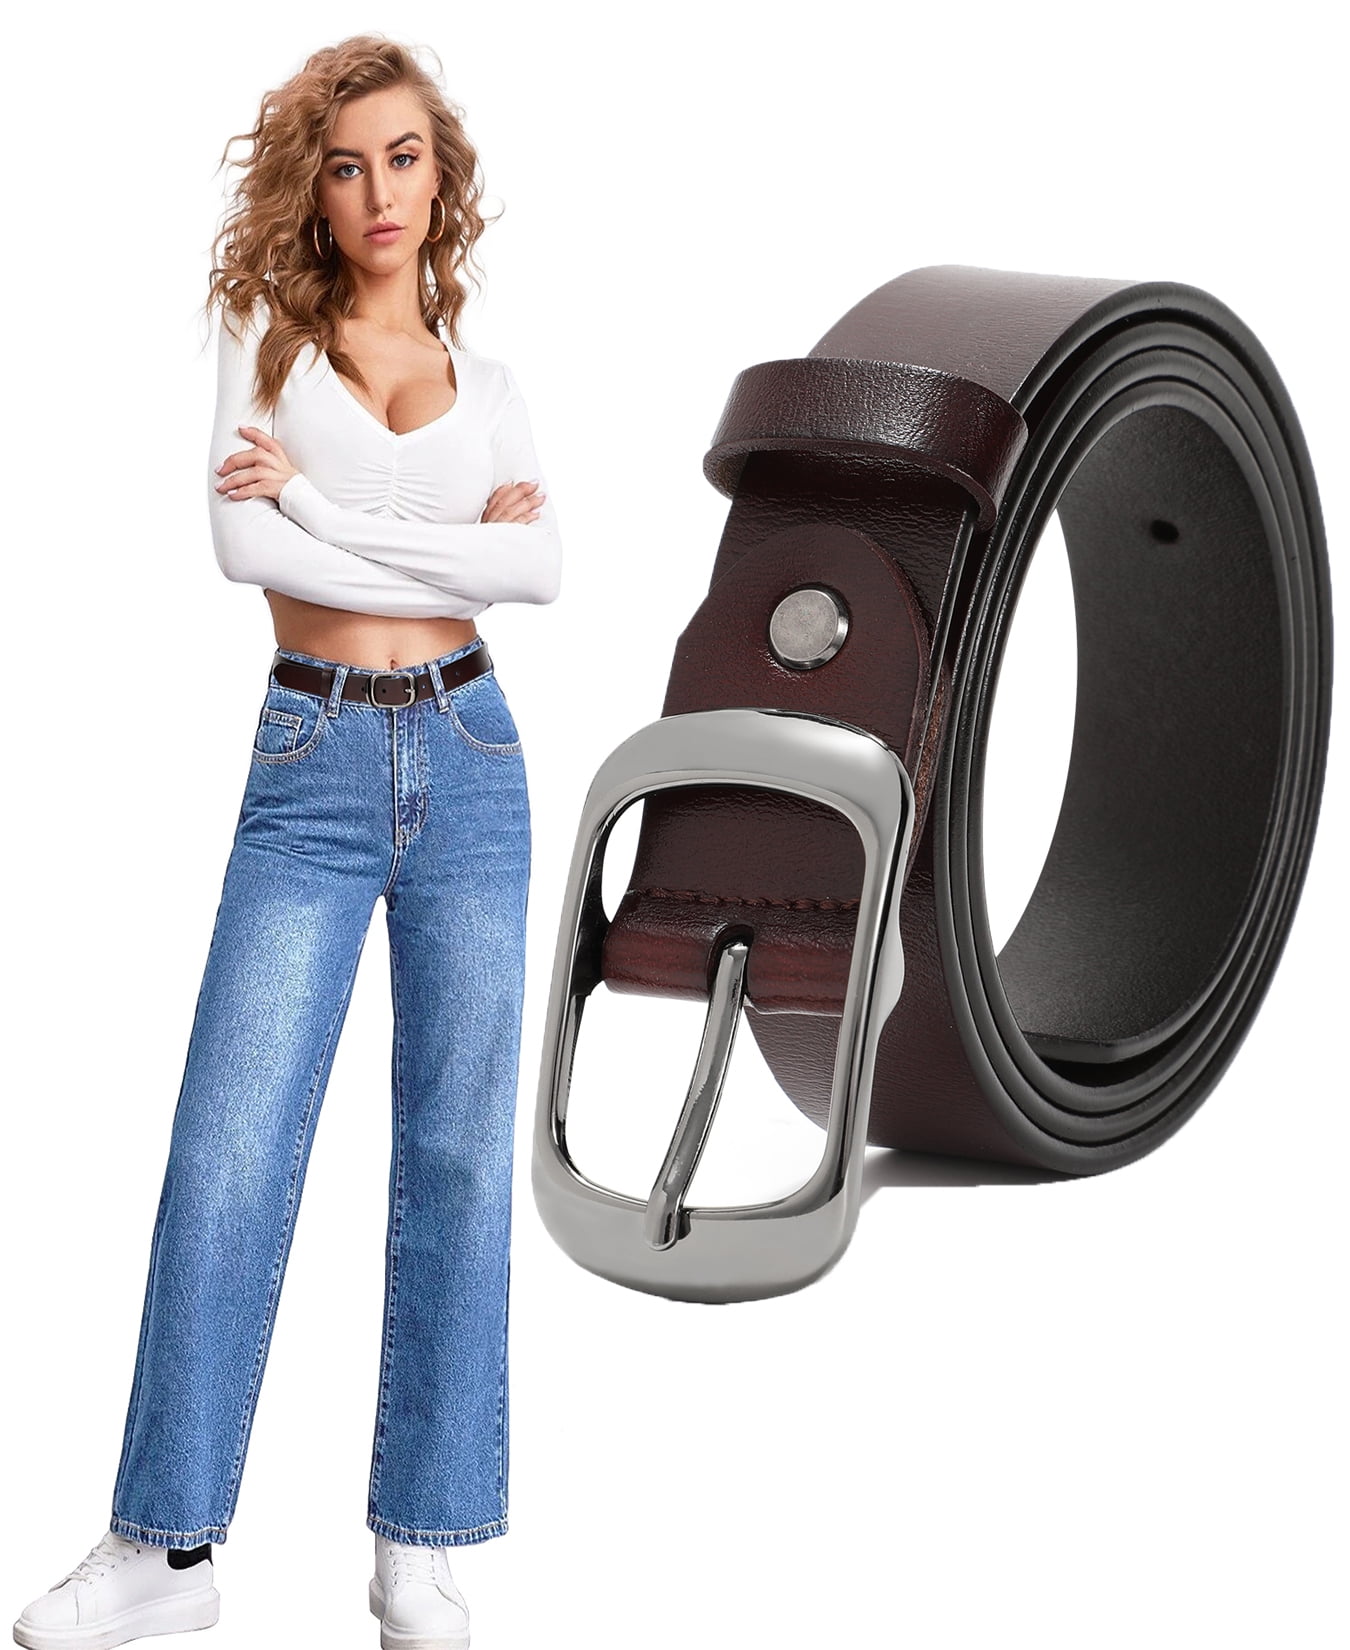 JASGOOD Women Leather Belts for Jeans Pants Fashion Dress Brown Belt ...